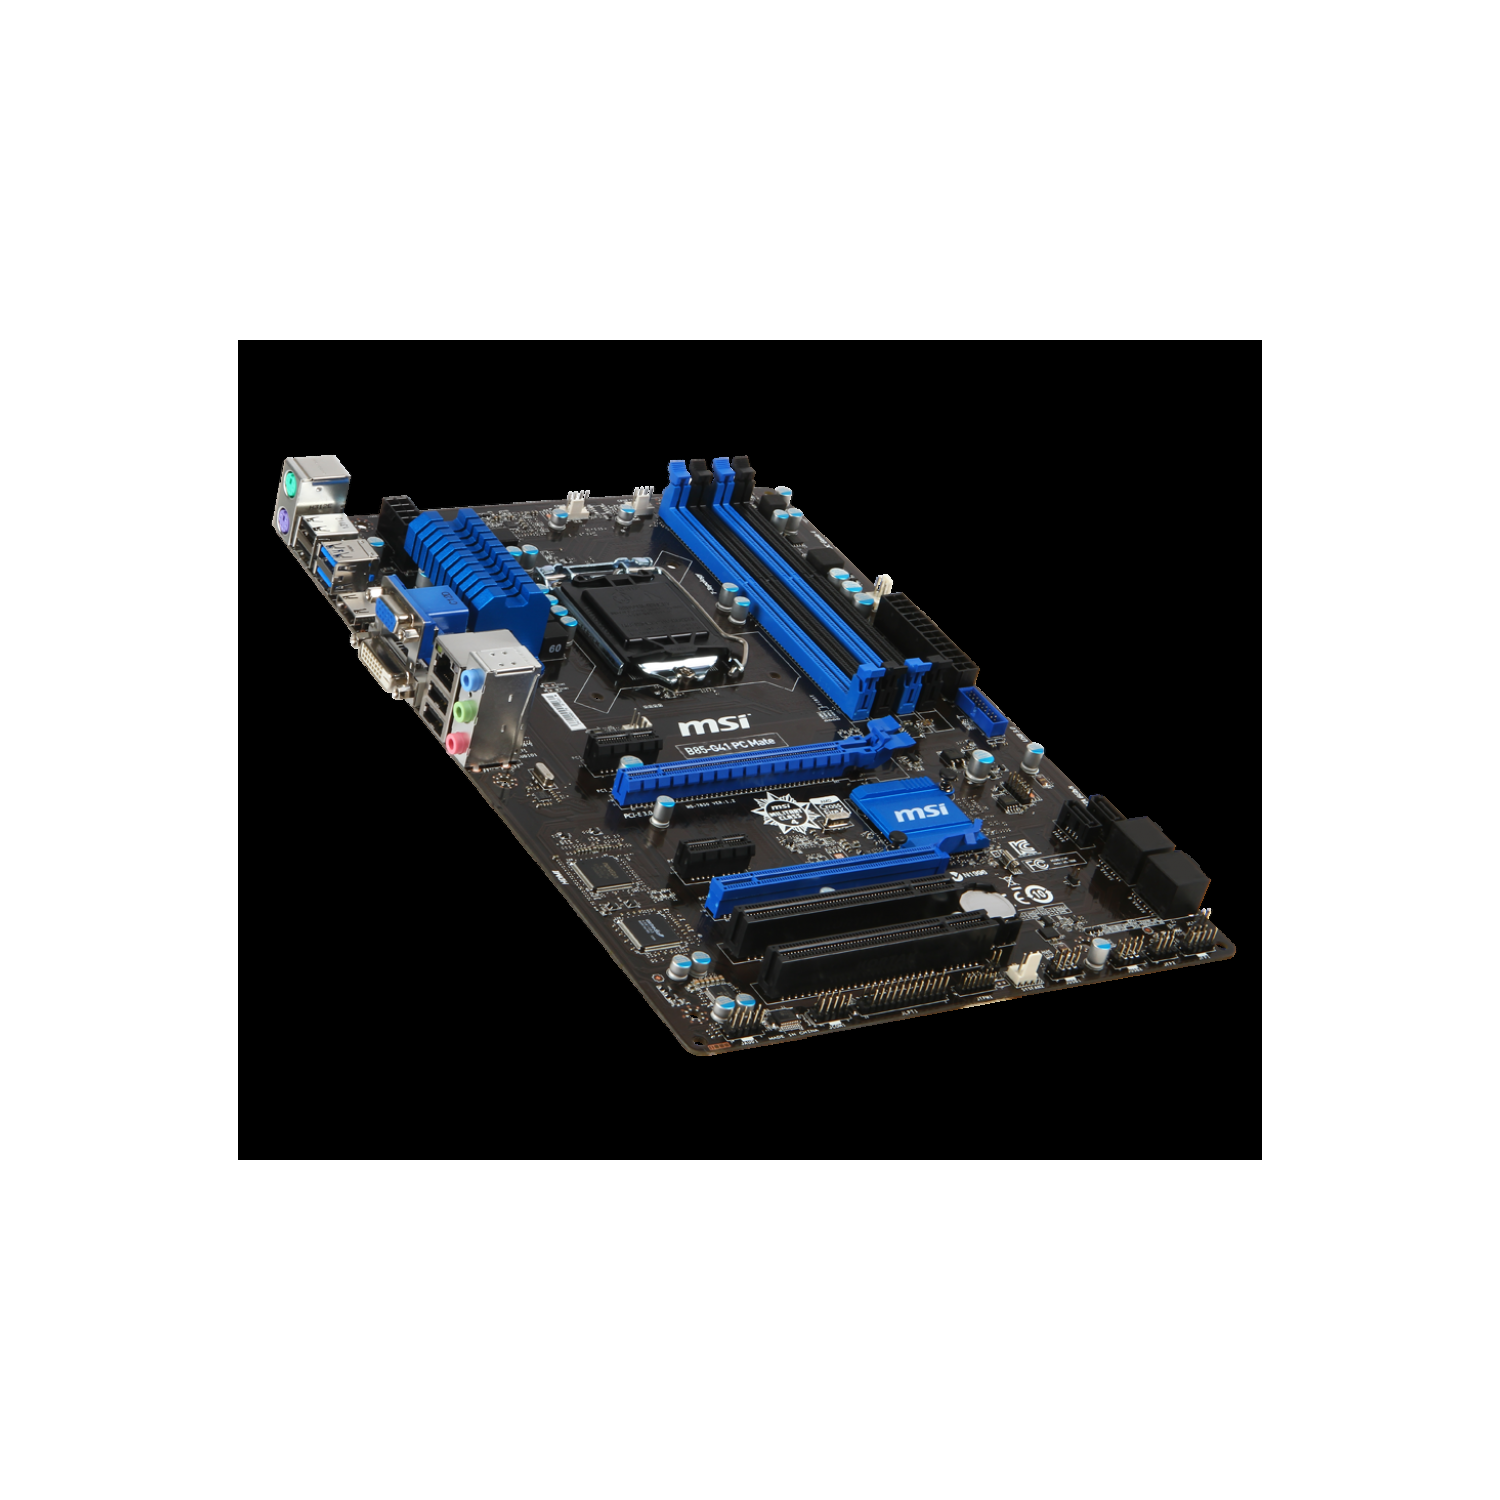 MSI Motherboard LGA1150 B85-G41 PC Mate Intel 4th Gen with Panel- Refurbished